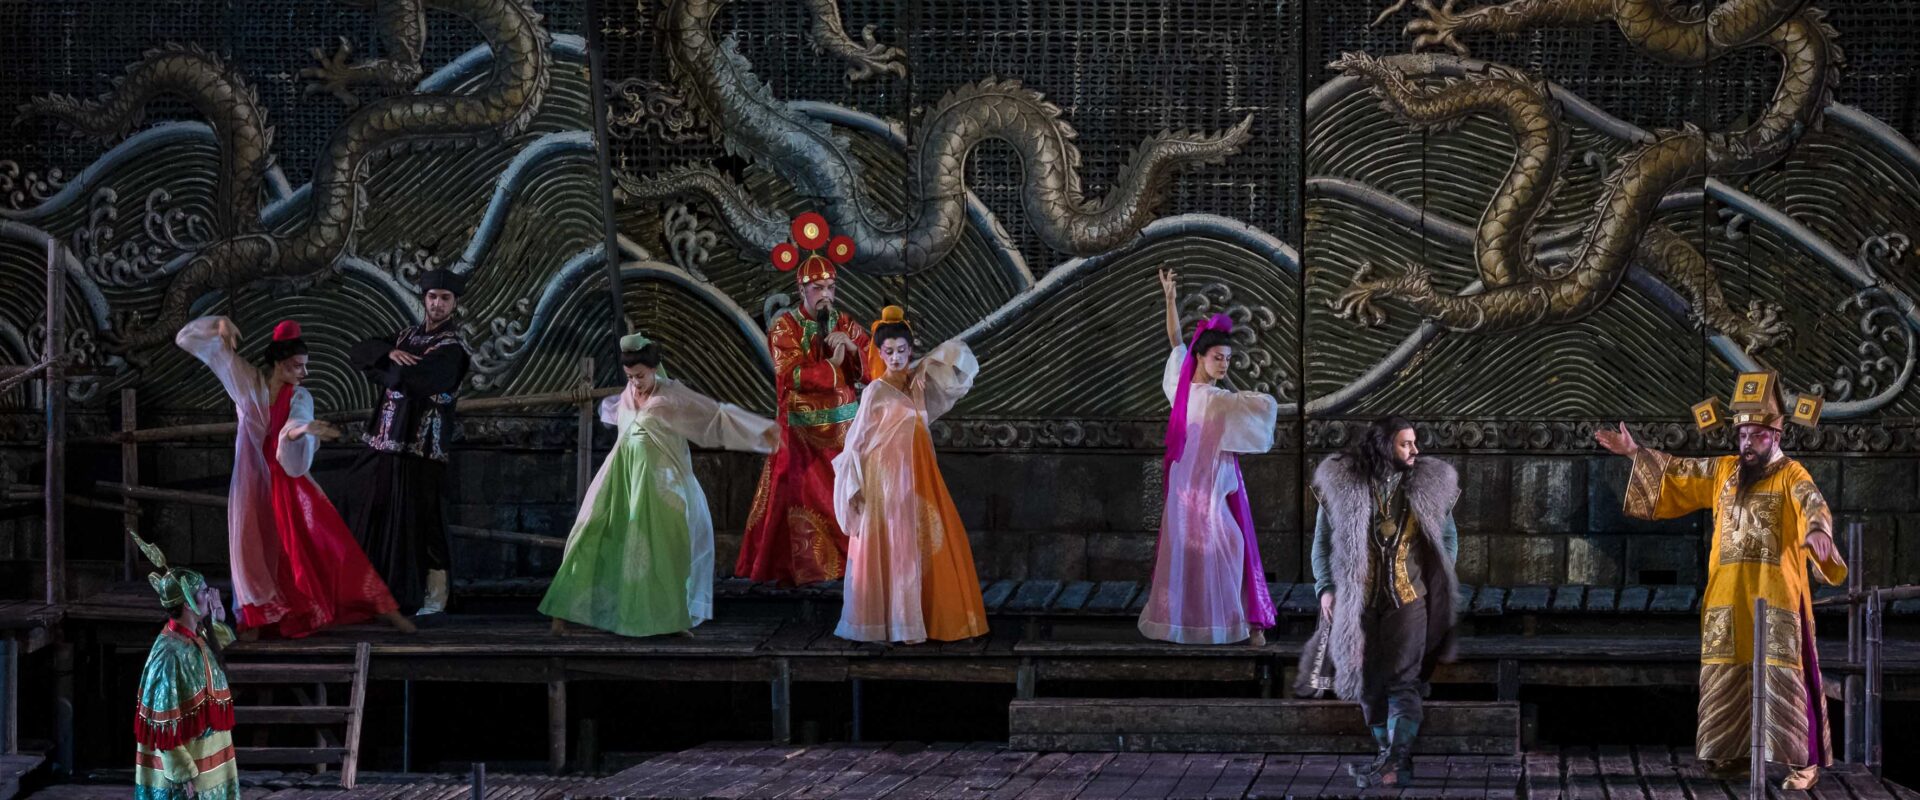 Puccini’s “Turandot” starring Anna Netrebko at Cinema City Poland in March